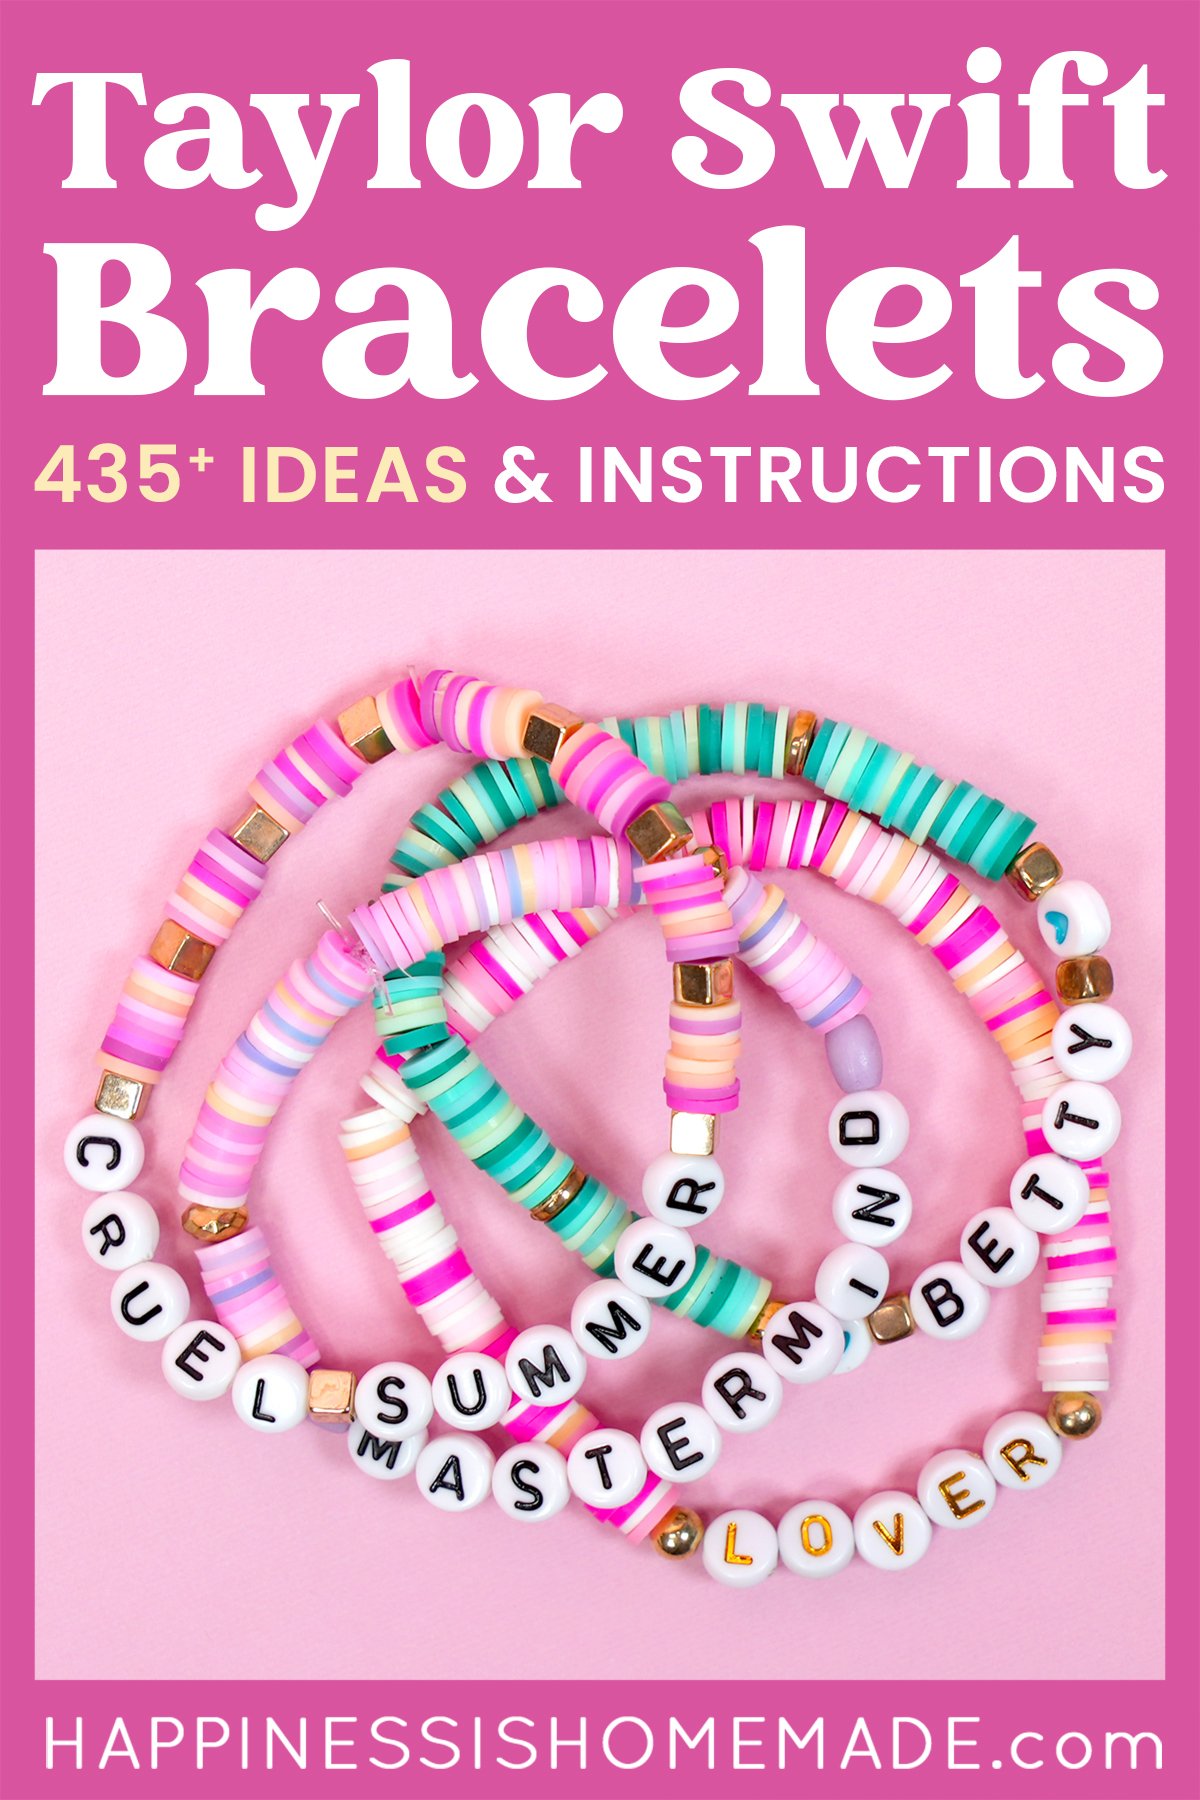 Pinterest graphic: "Taylor Swift Bracelets: 435+ Friendship Bracelet Ideas & Instructions" with bracelet examples